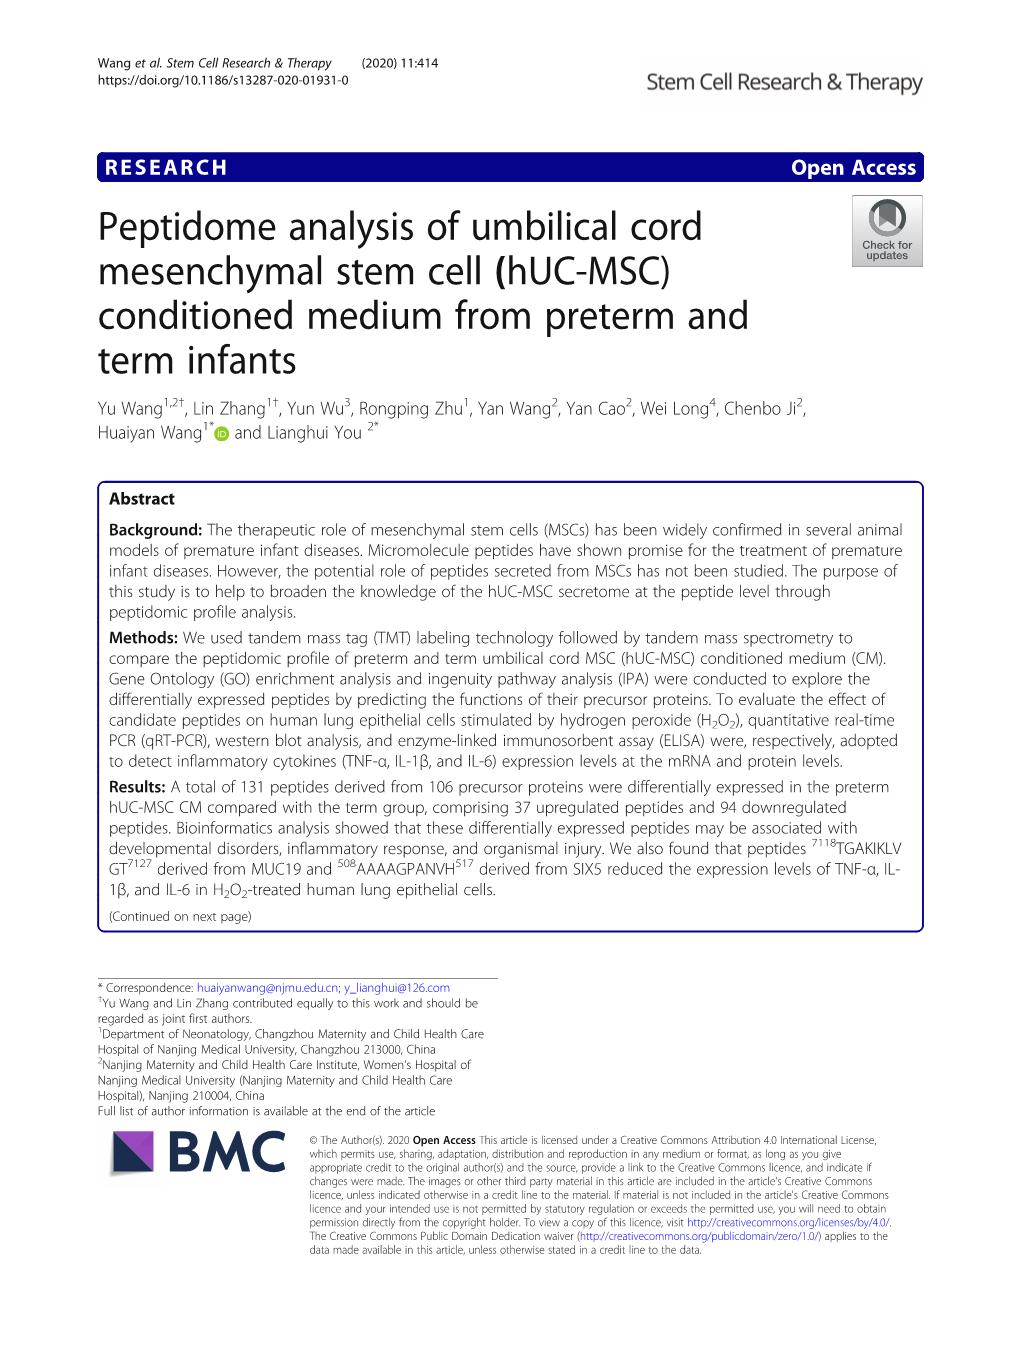 Peptidome Analysis of Umbilical Cord Mesenchymal Stem Cell (Huc-MSC